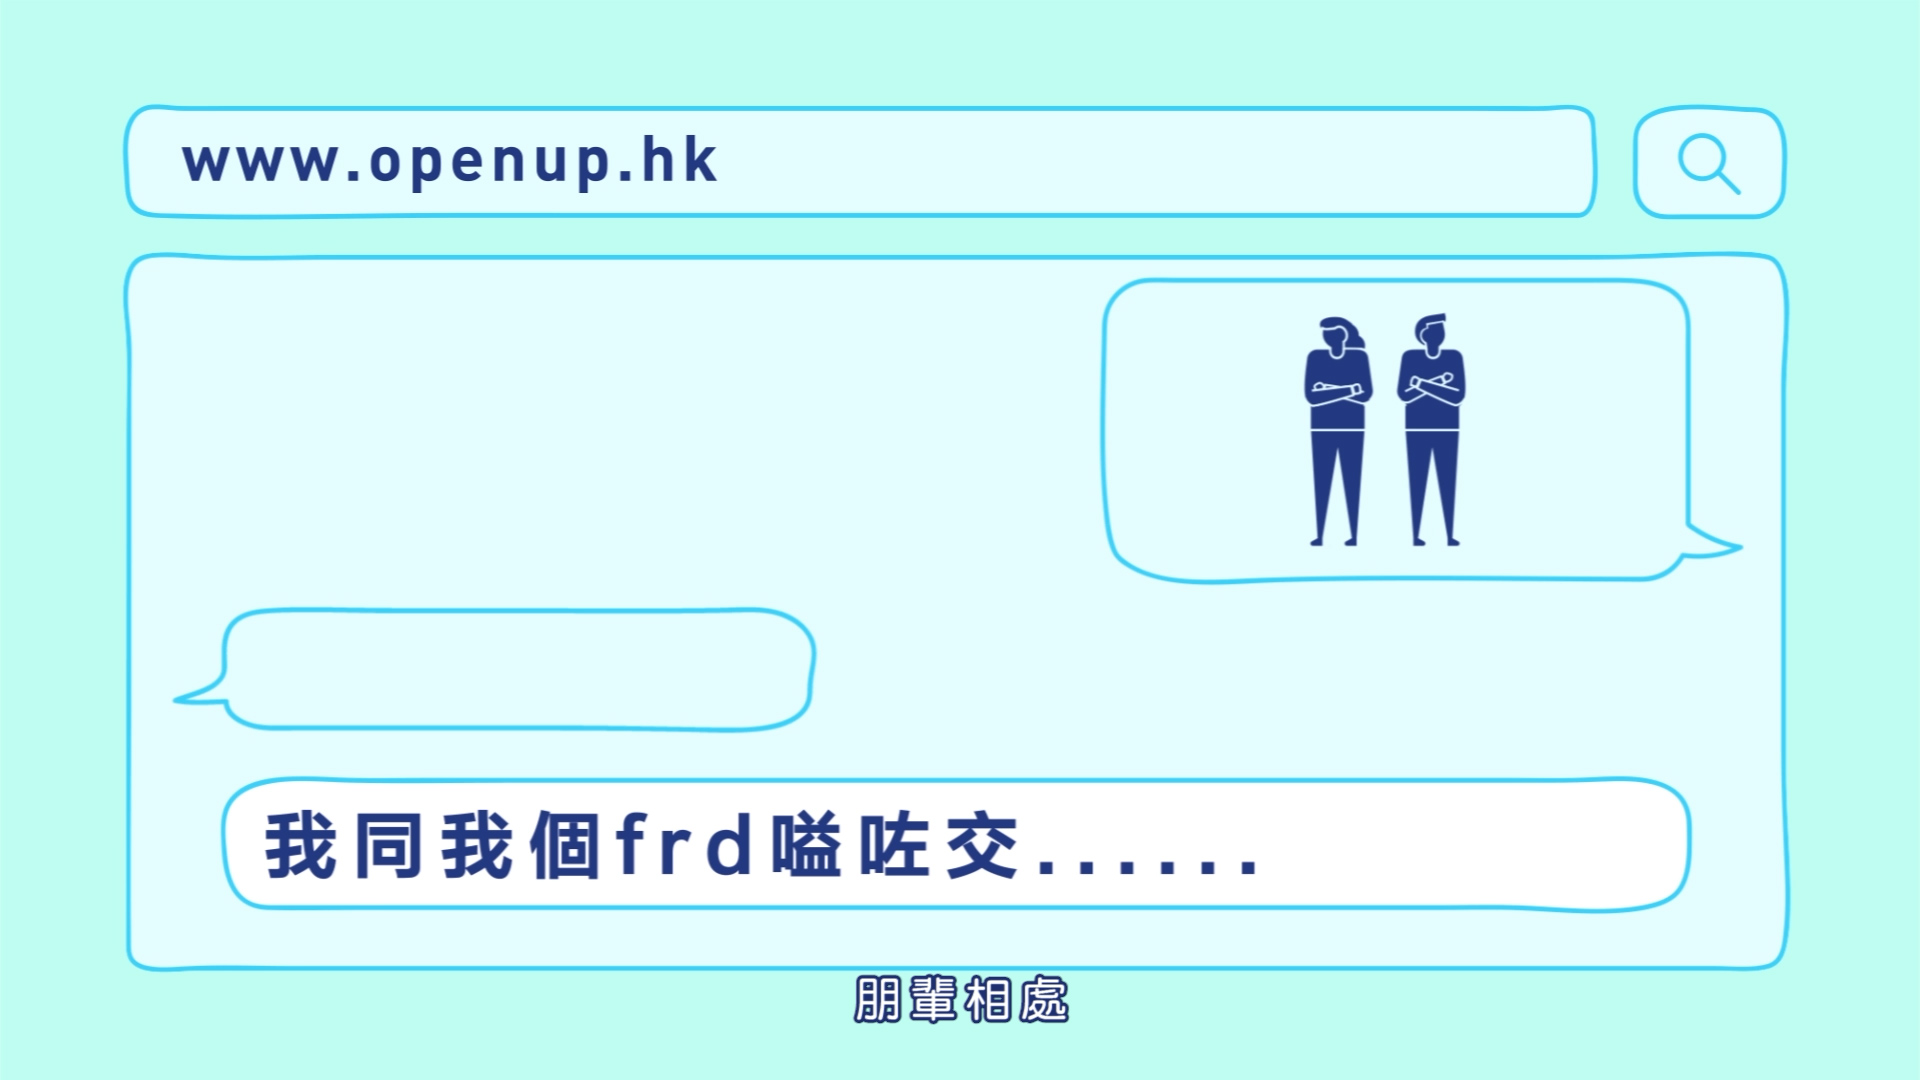 OPENUP.HK 年青人的網上輔導平台